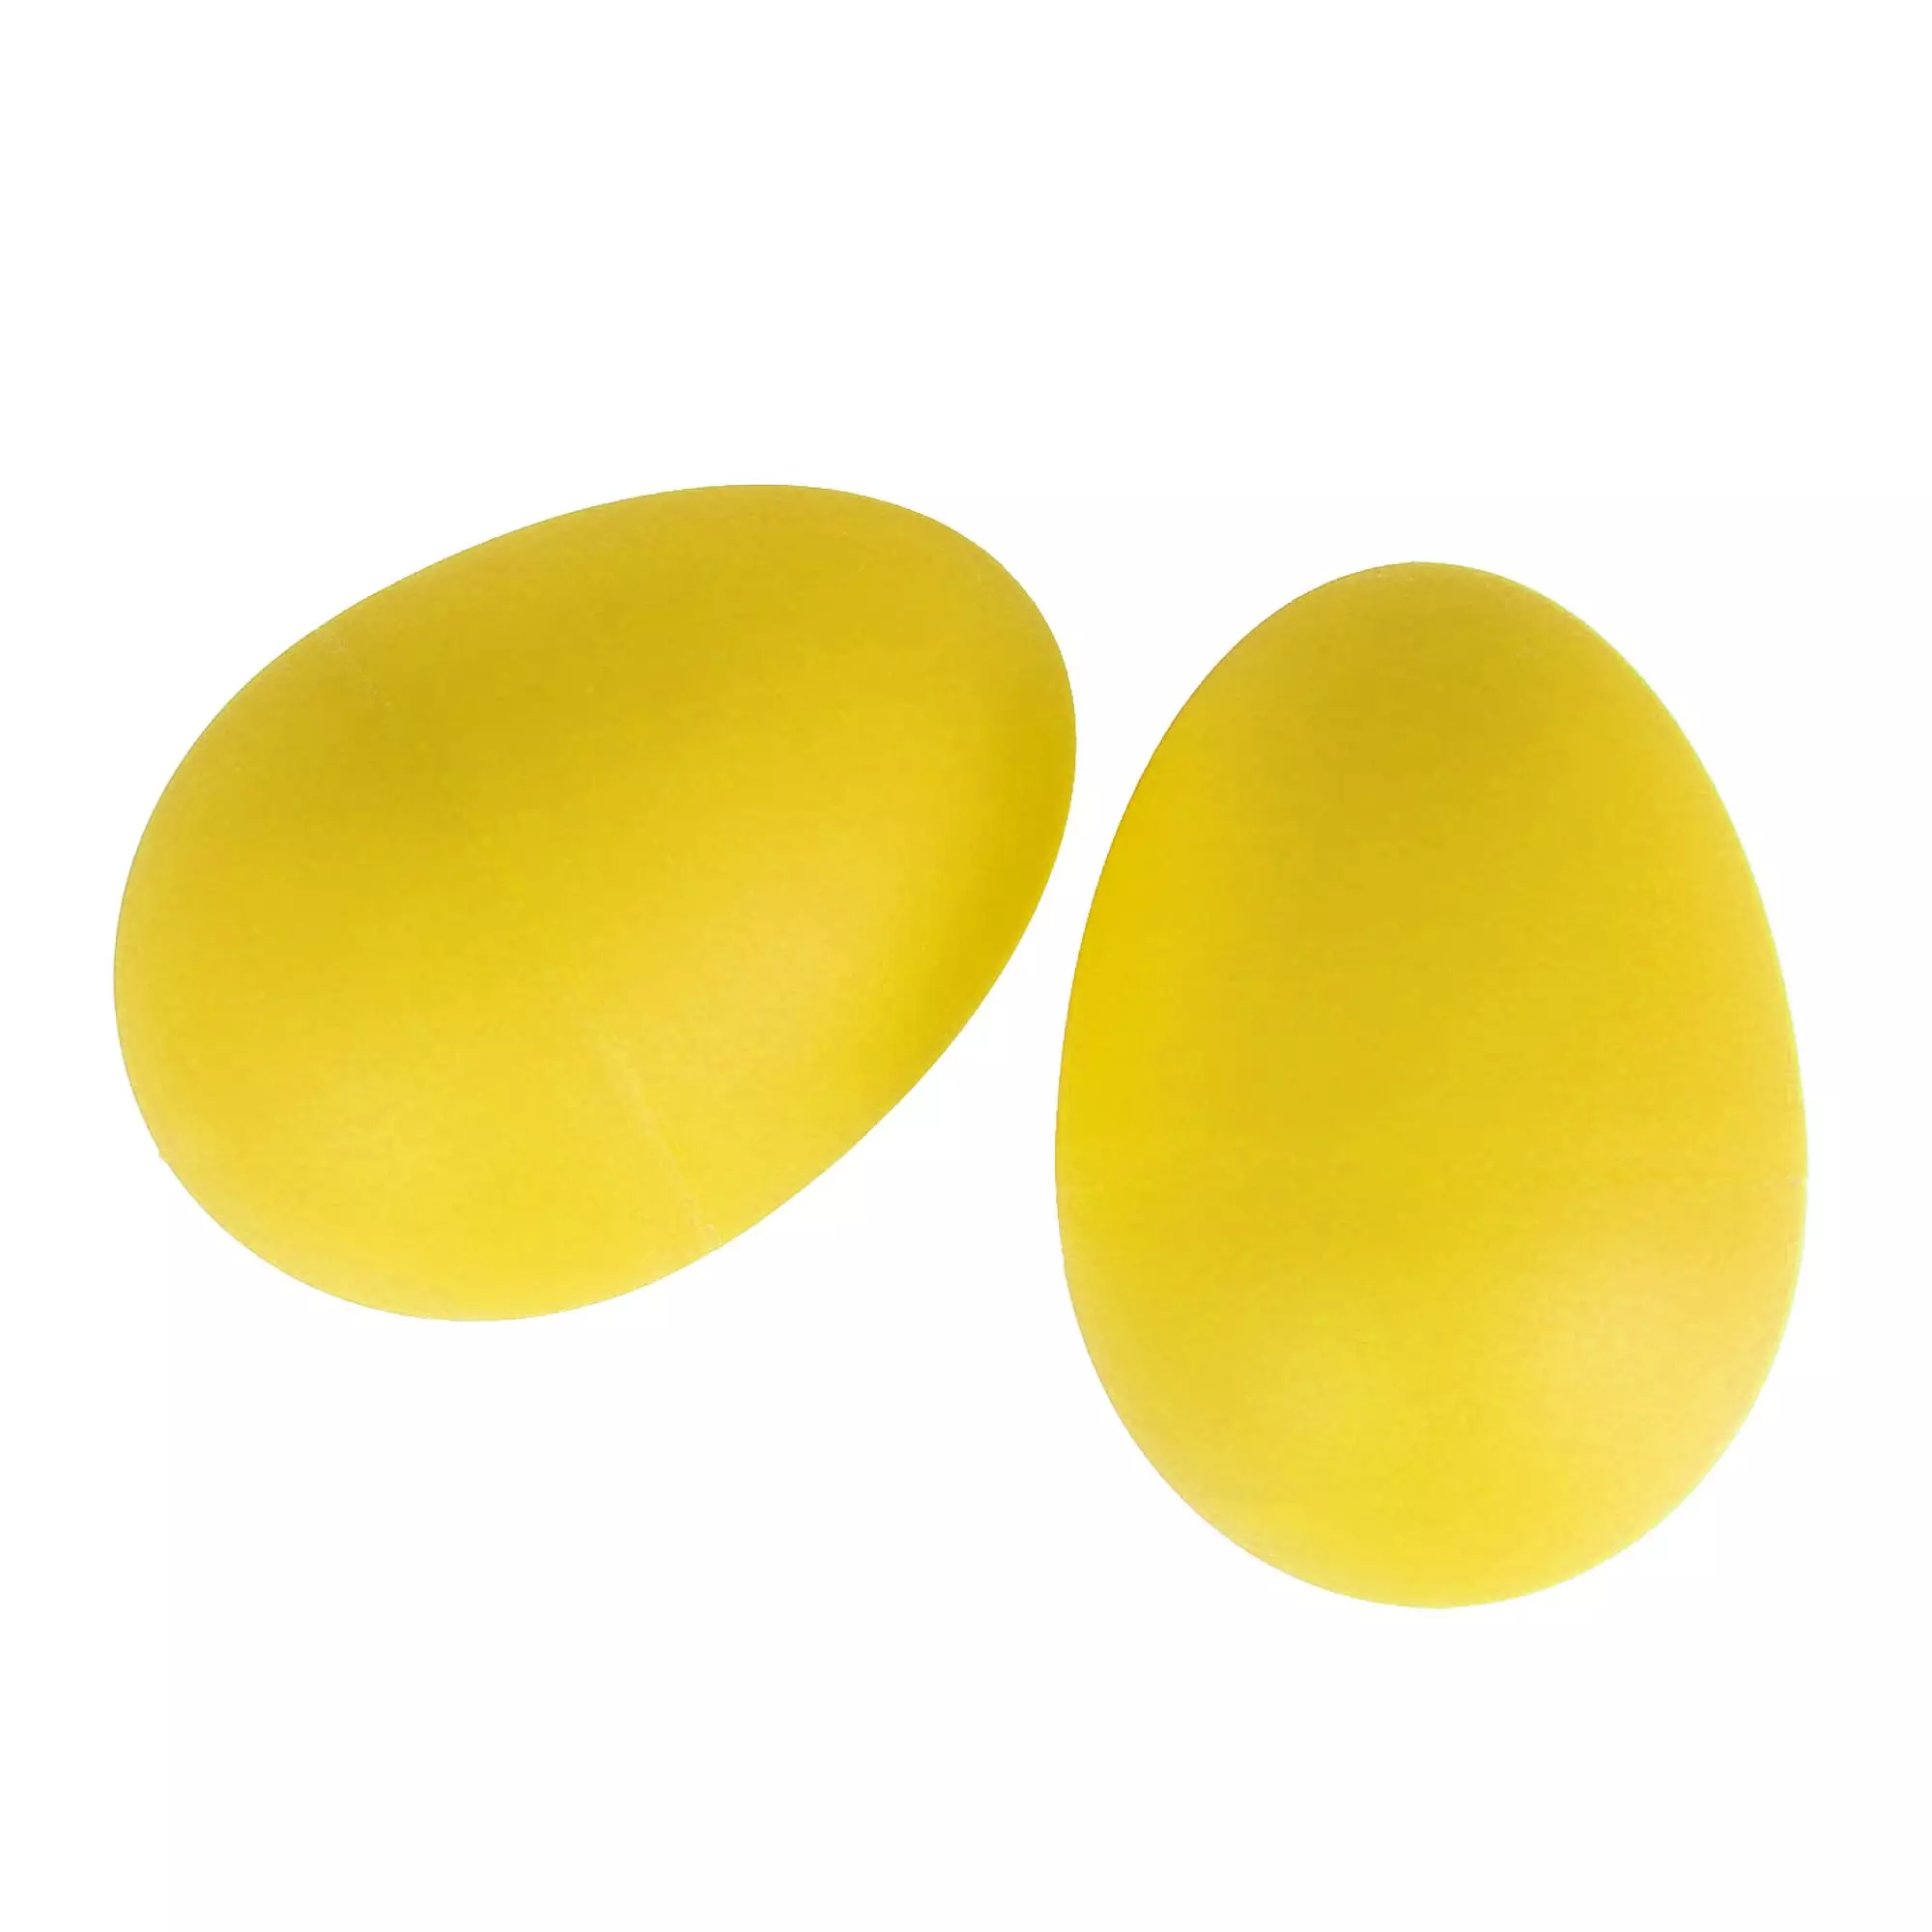 Pair of Yellow Egg Shakers